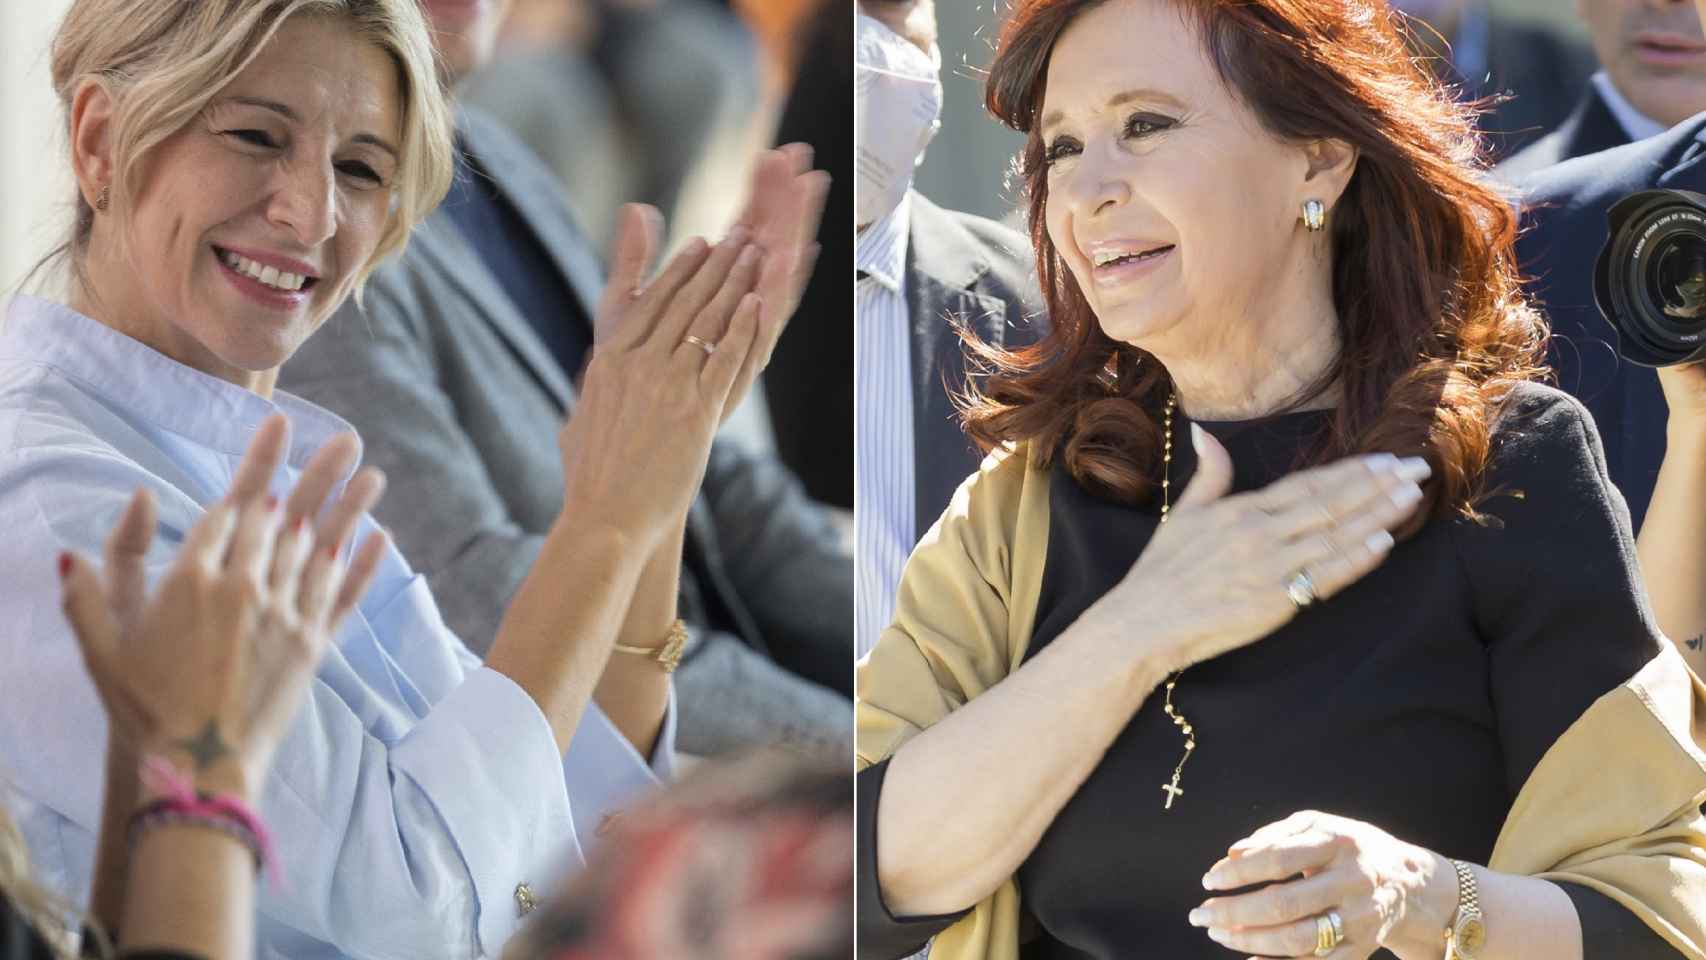 Yolanda Díaz, vicepresidenta segunda del Gobierno de España, y Cristina Fernández de Kirchner, vicepresidenta de Argentina.